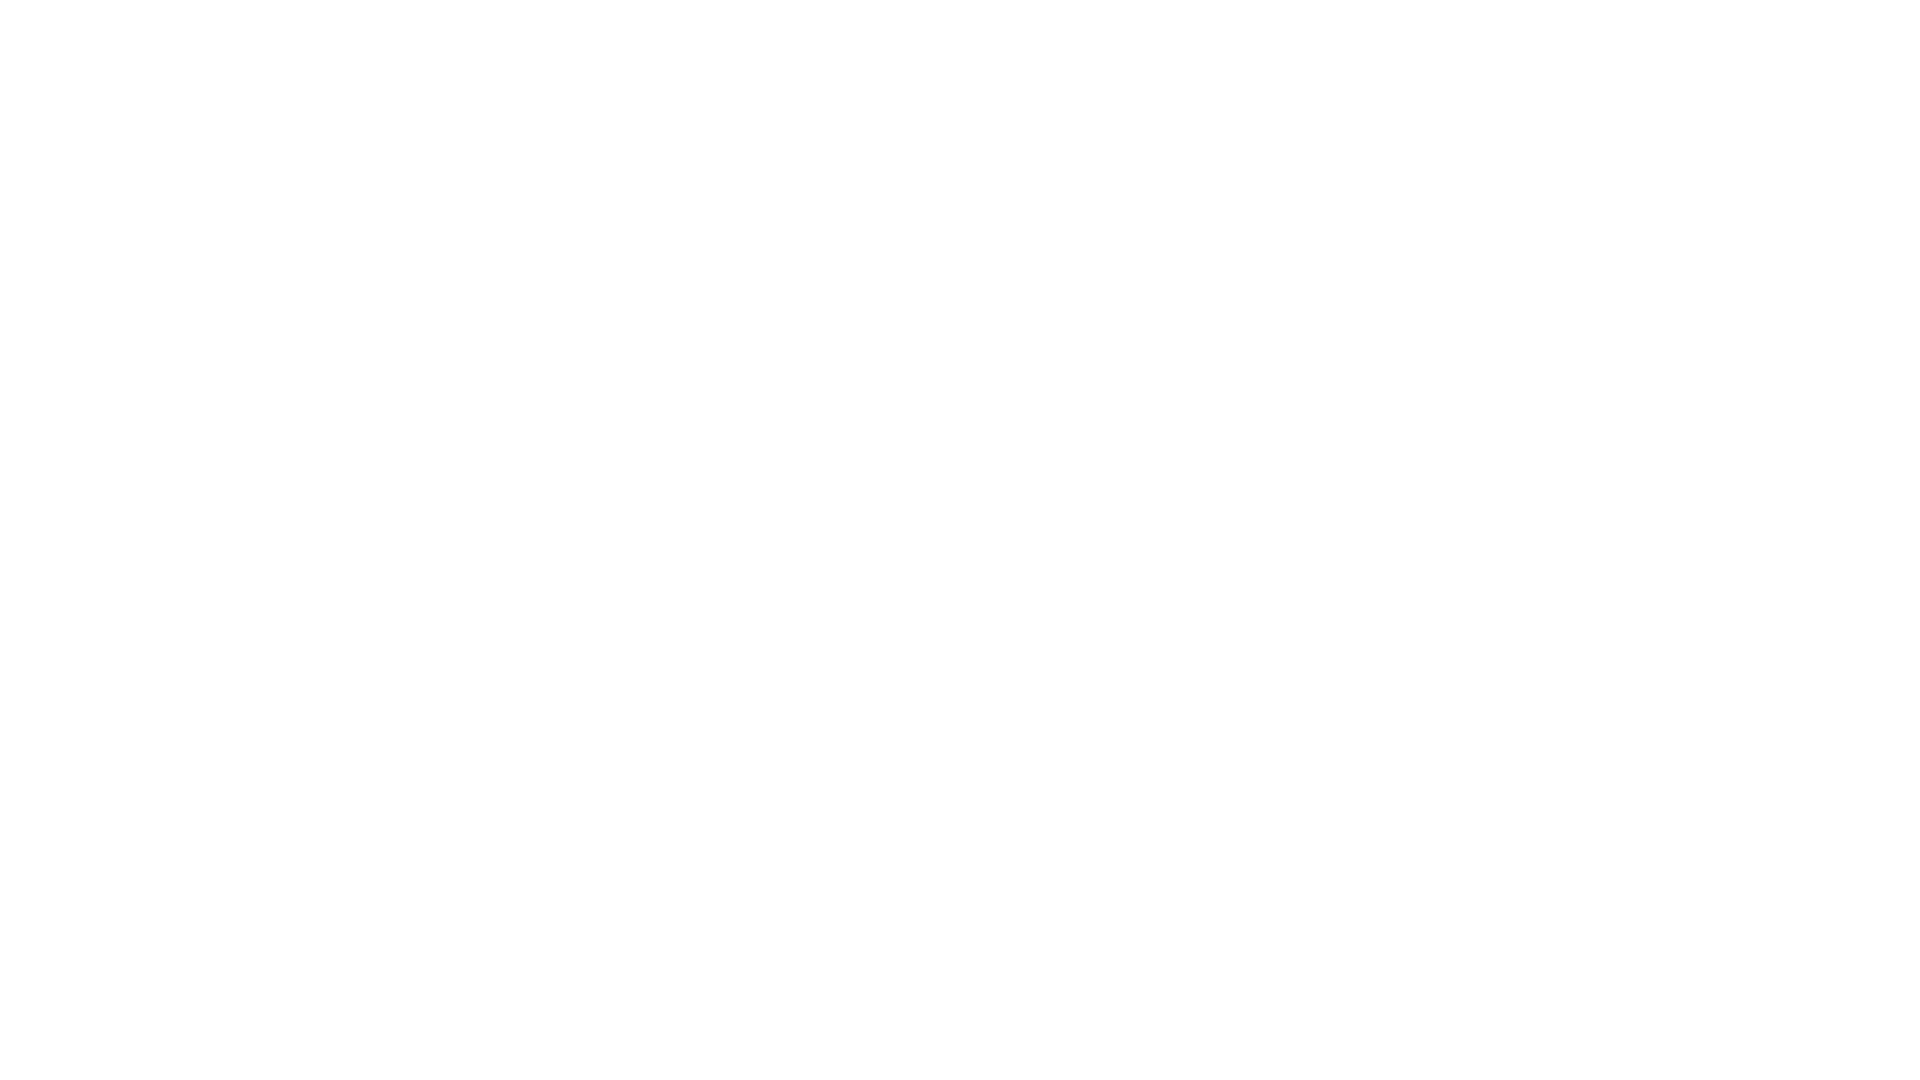 Вариации логотипа компании Апгрейд. Слайд из брендбука